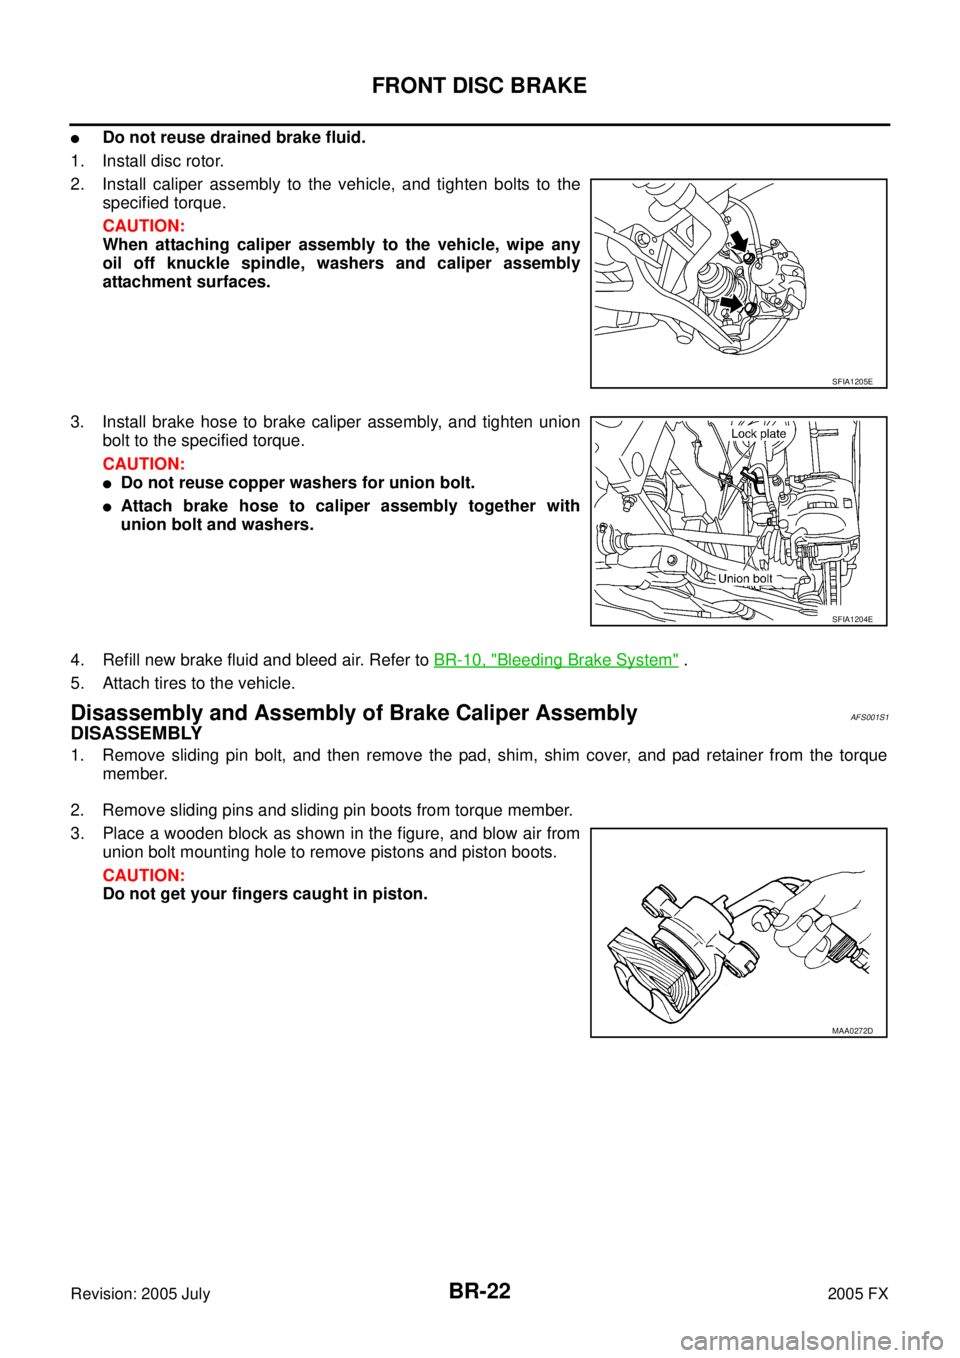 INFINITI FX35 2005  Service Manual BR-22
FRONT DISC BRAKE
Revision: 2005 July 2005 FX
Do not reuse drained brake fluid. 
1. Install disc rotor.
2. Install caliper assembly to the vehicle, and tighten bolts to the  specified torque. 
C